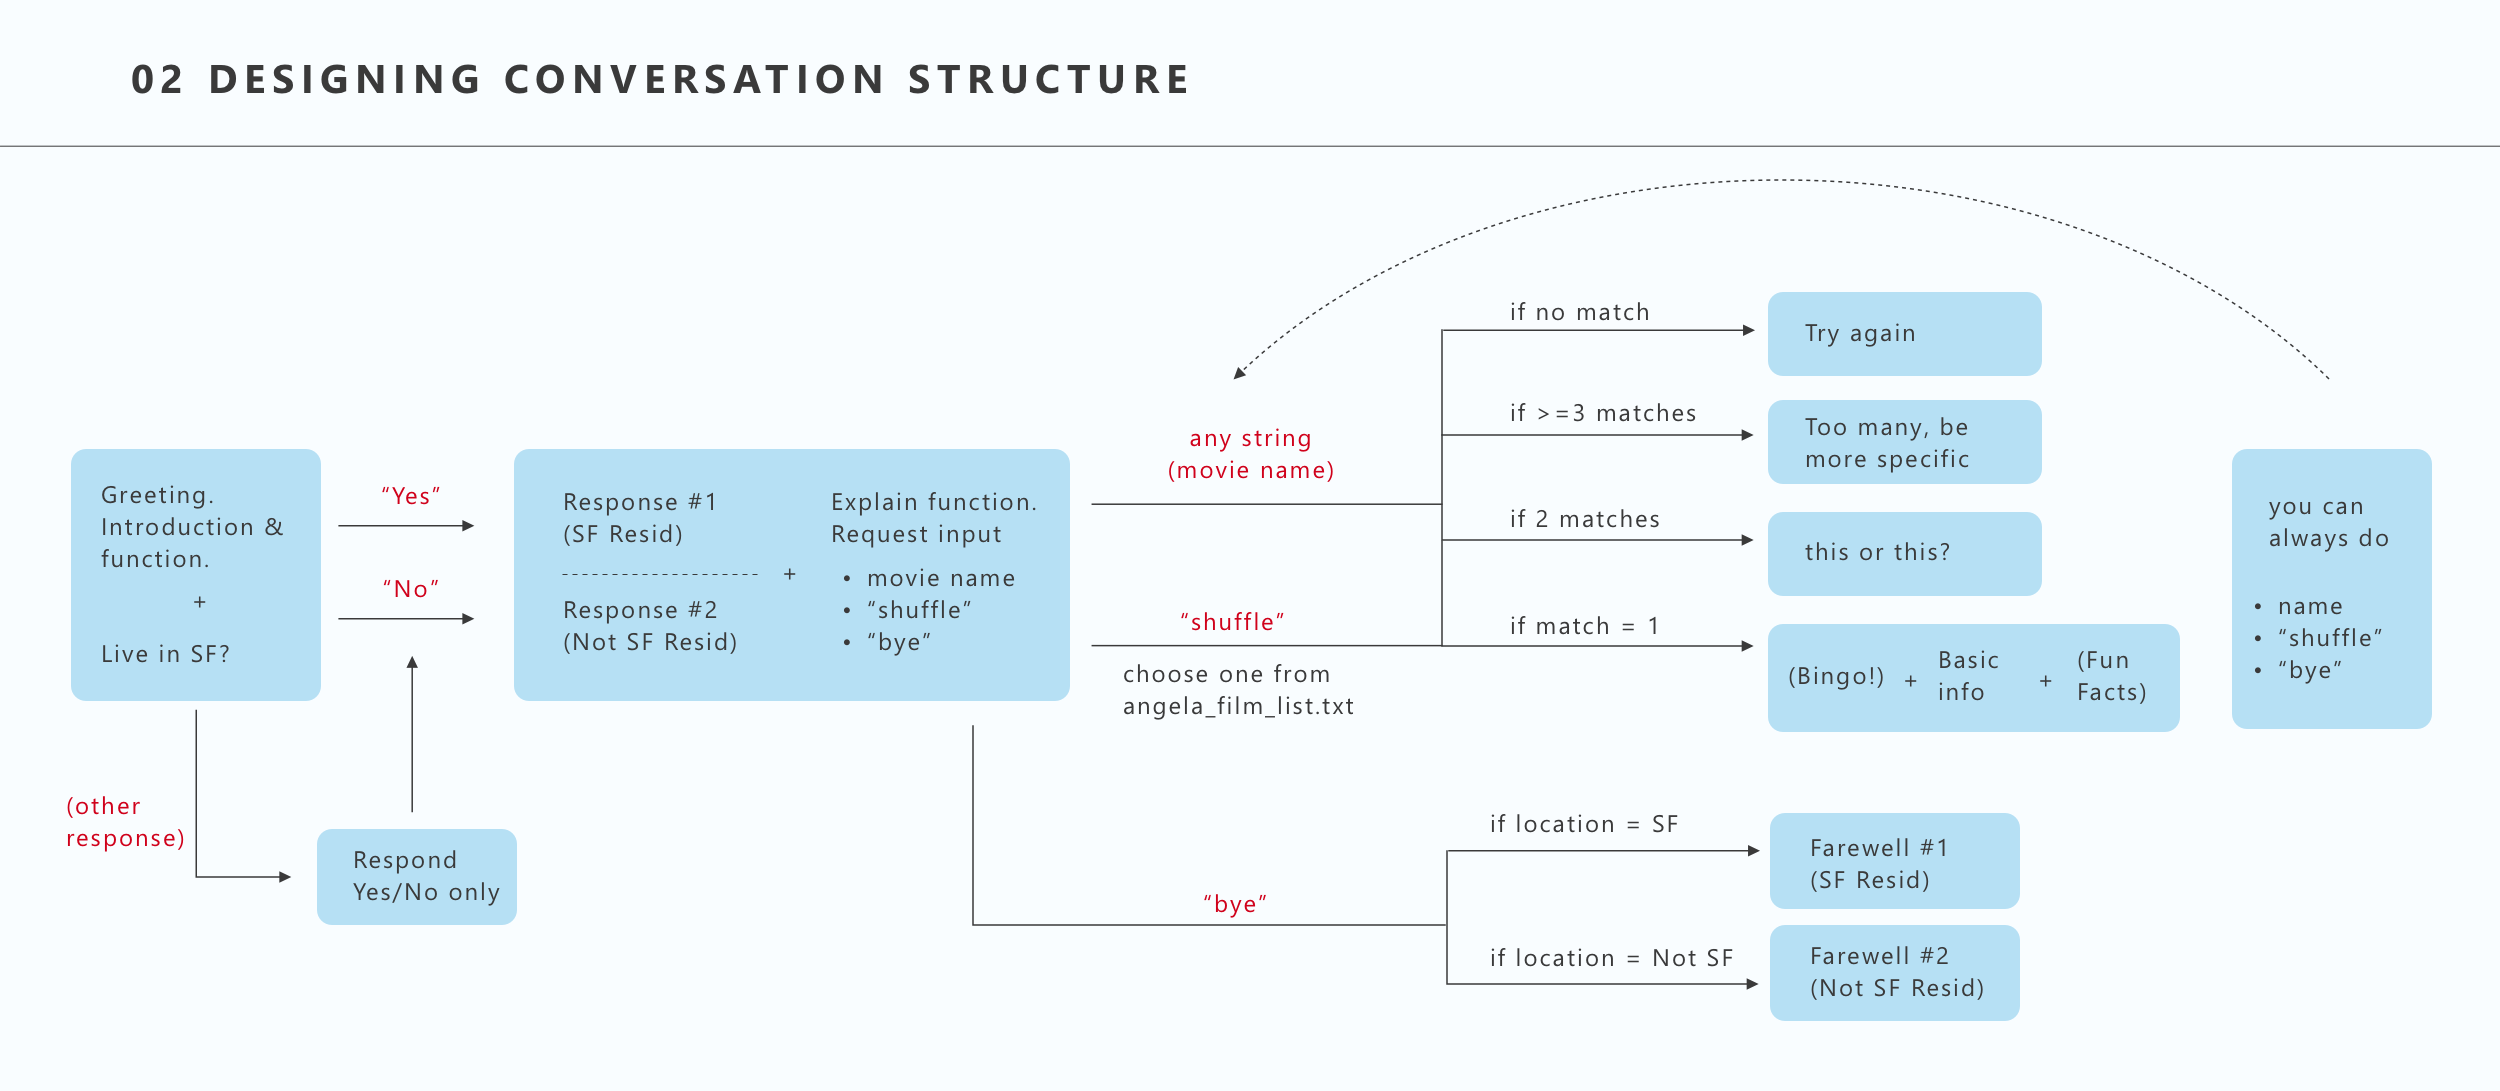 02 design conversation structure